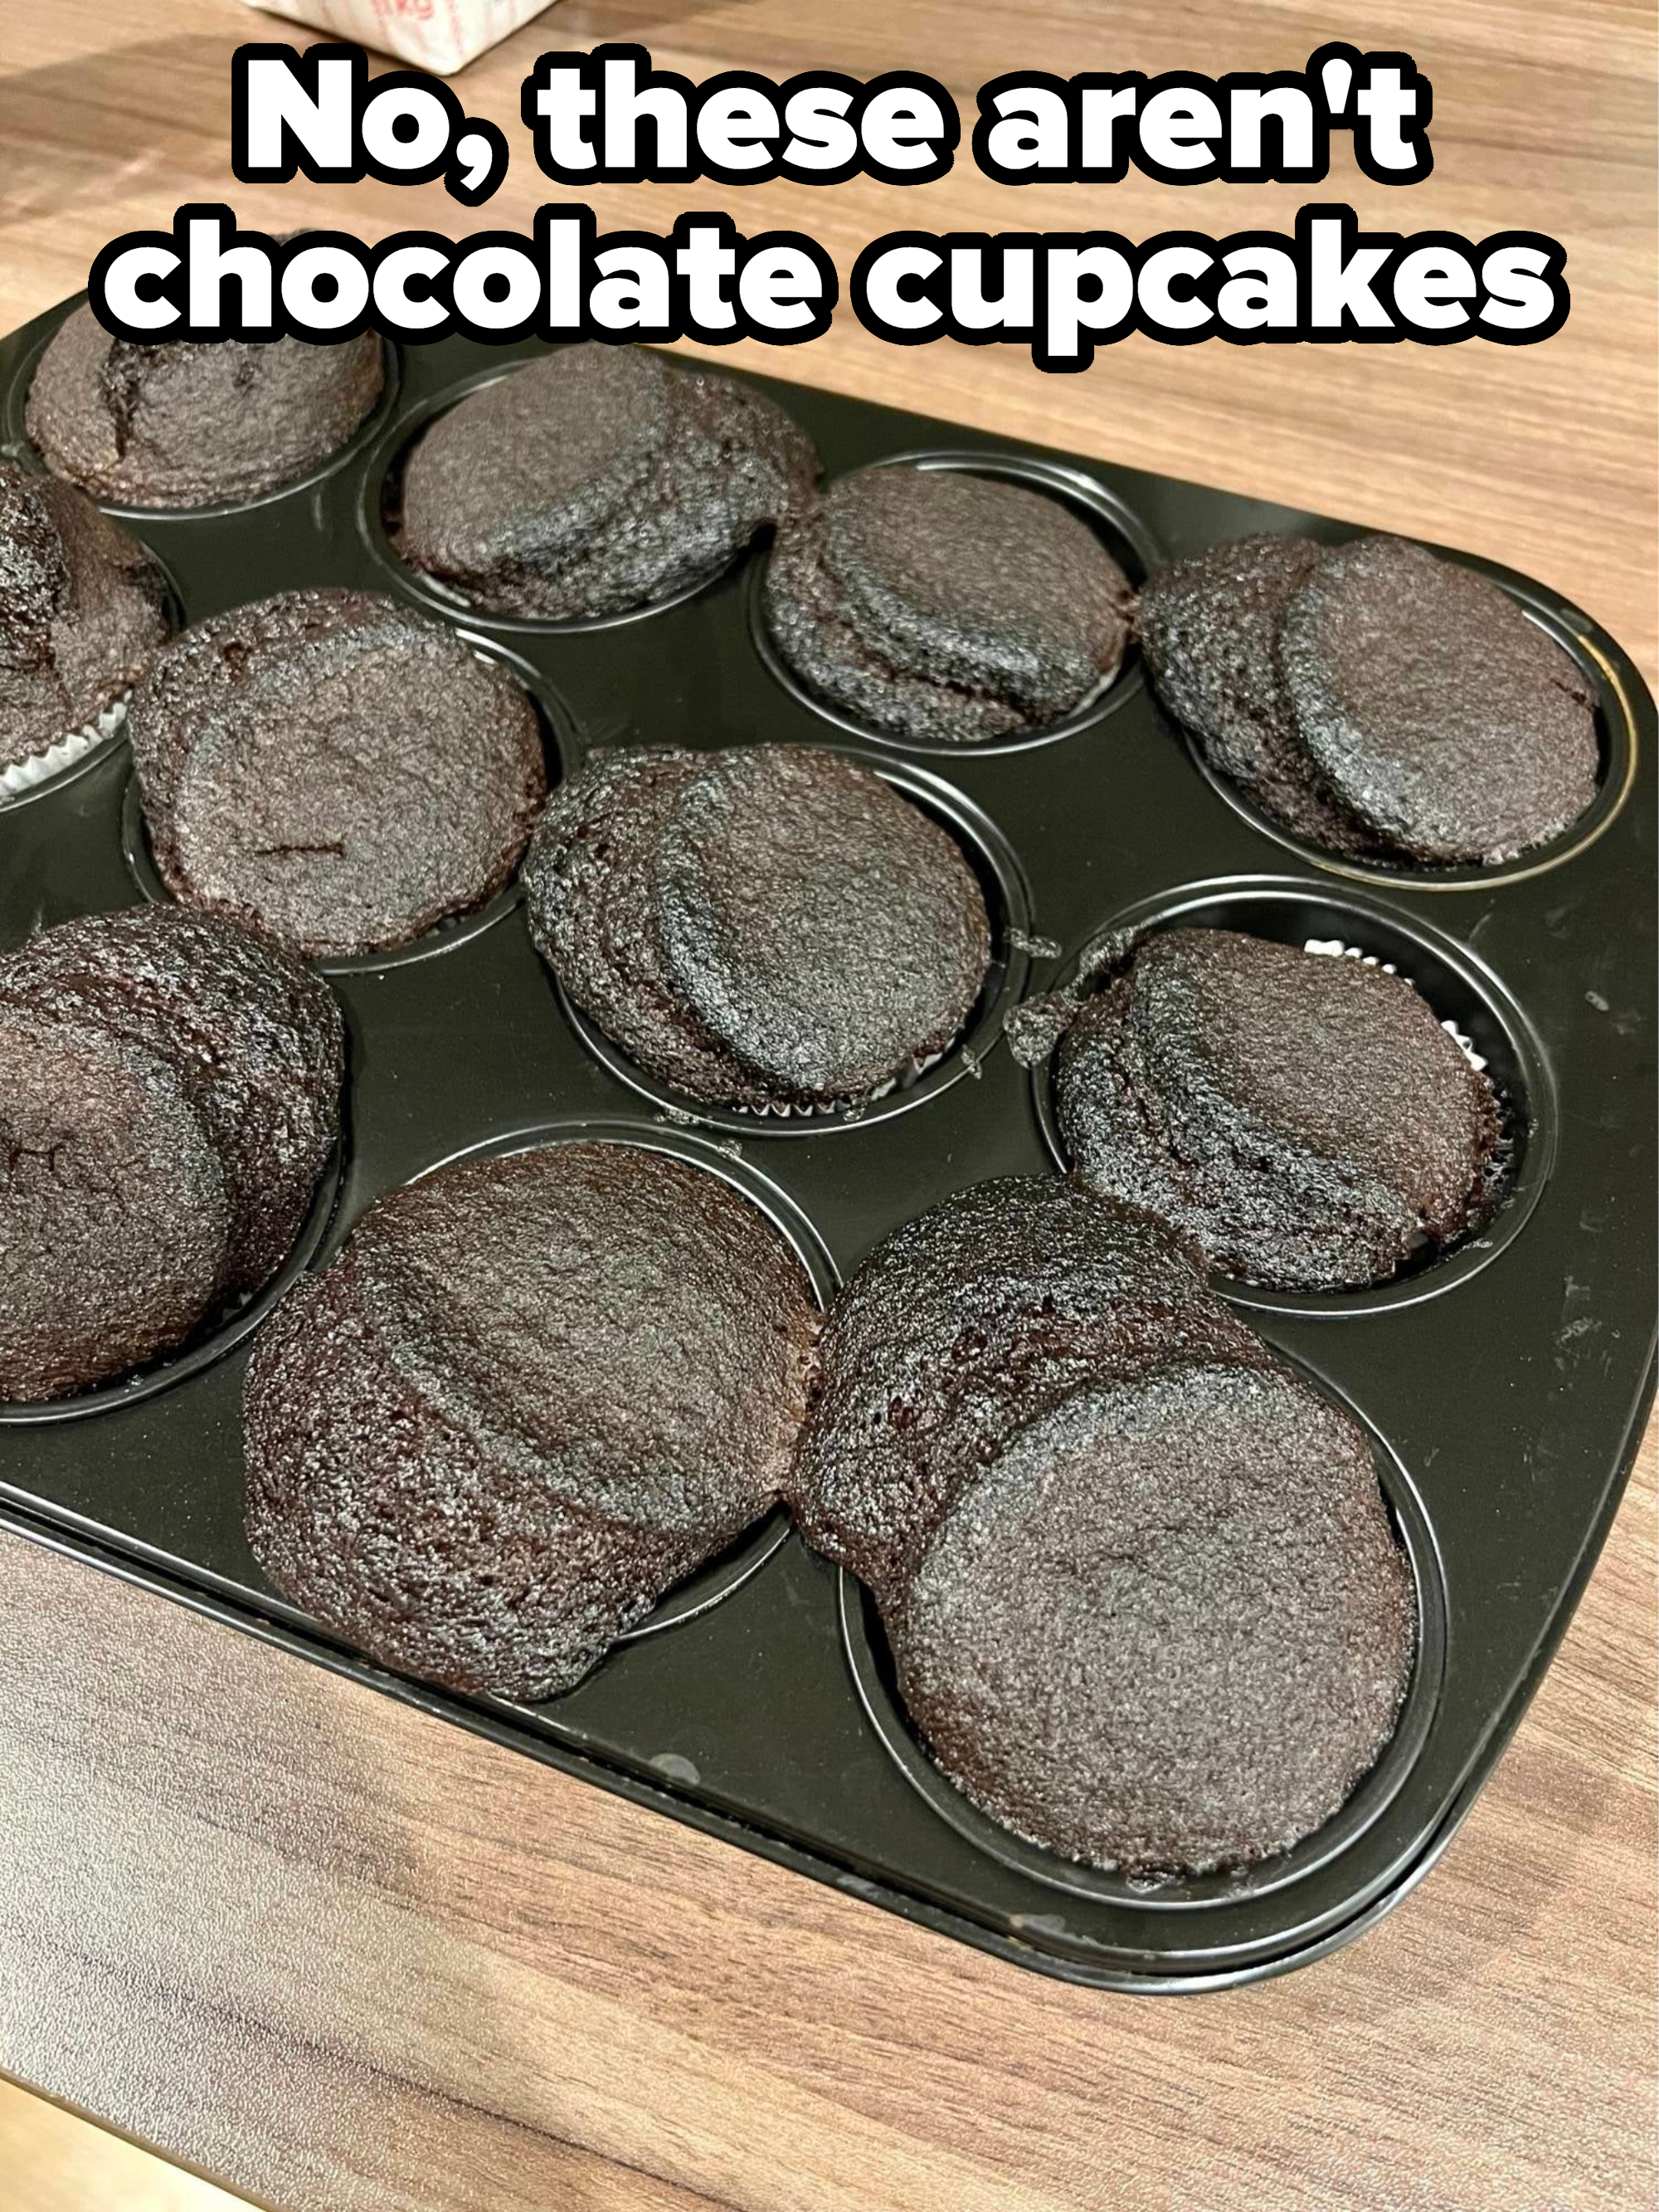 Burnt cupcakes in a pan